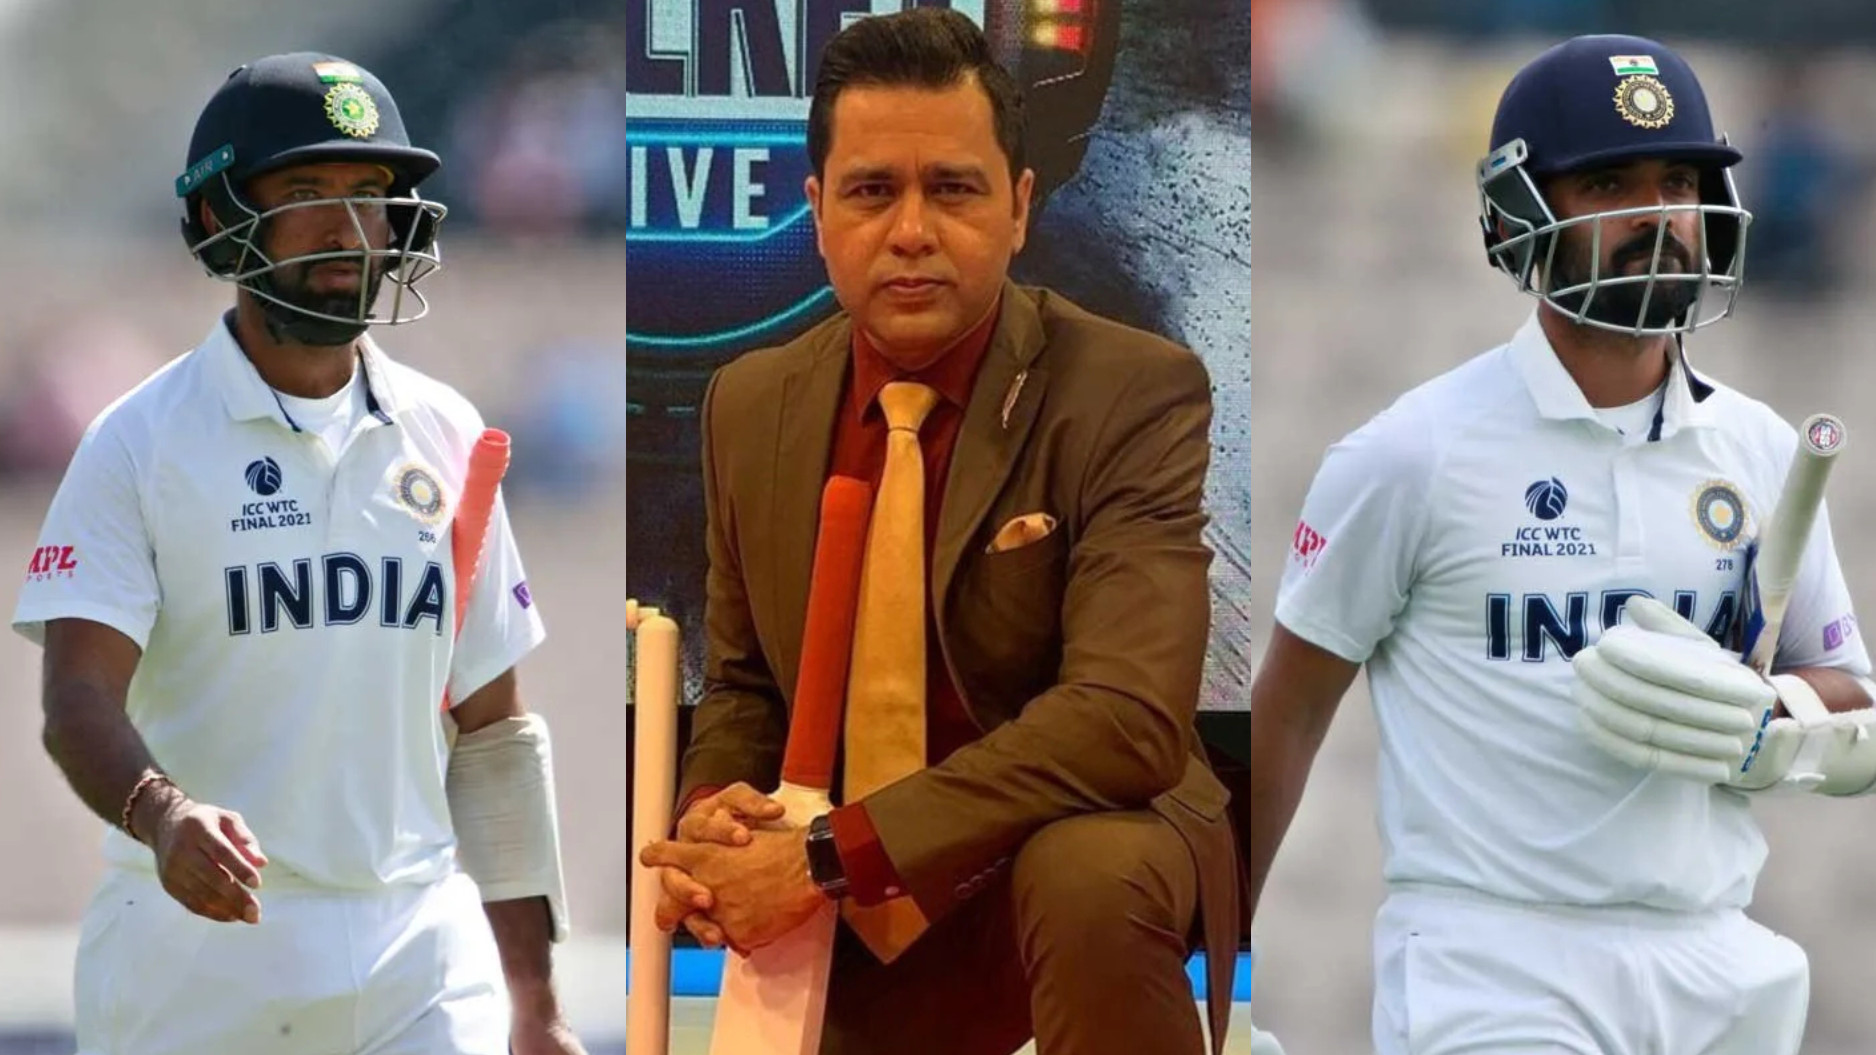 SA v IND 2021-22: ‘I'm rooting for Pujara, not sure about Rahane’- Aakash Chopra on India’s batting lineup for SA Tests